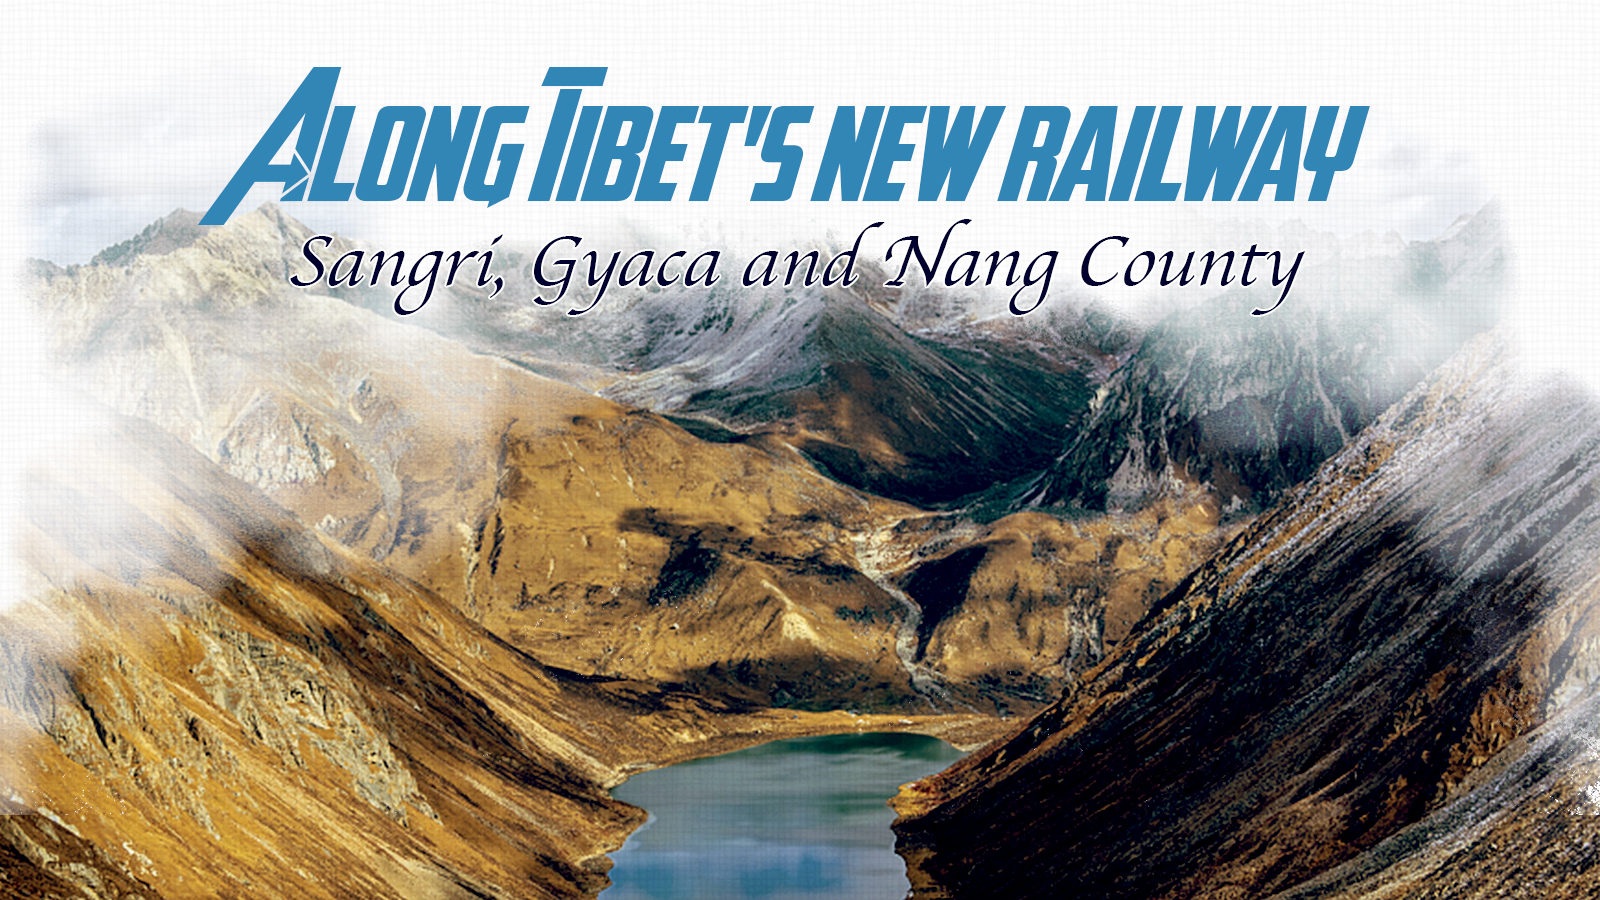 Along Tibet's New Railway: Majestic, mysterious hinterland